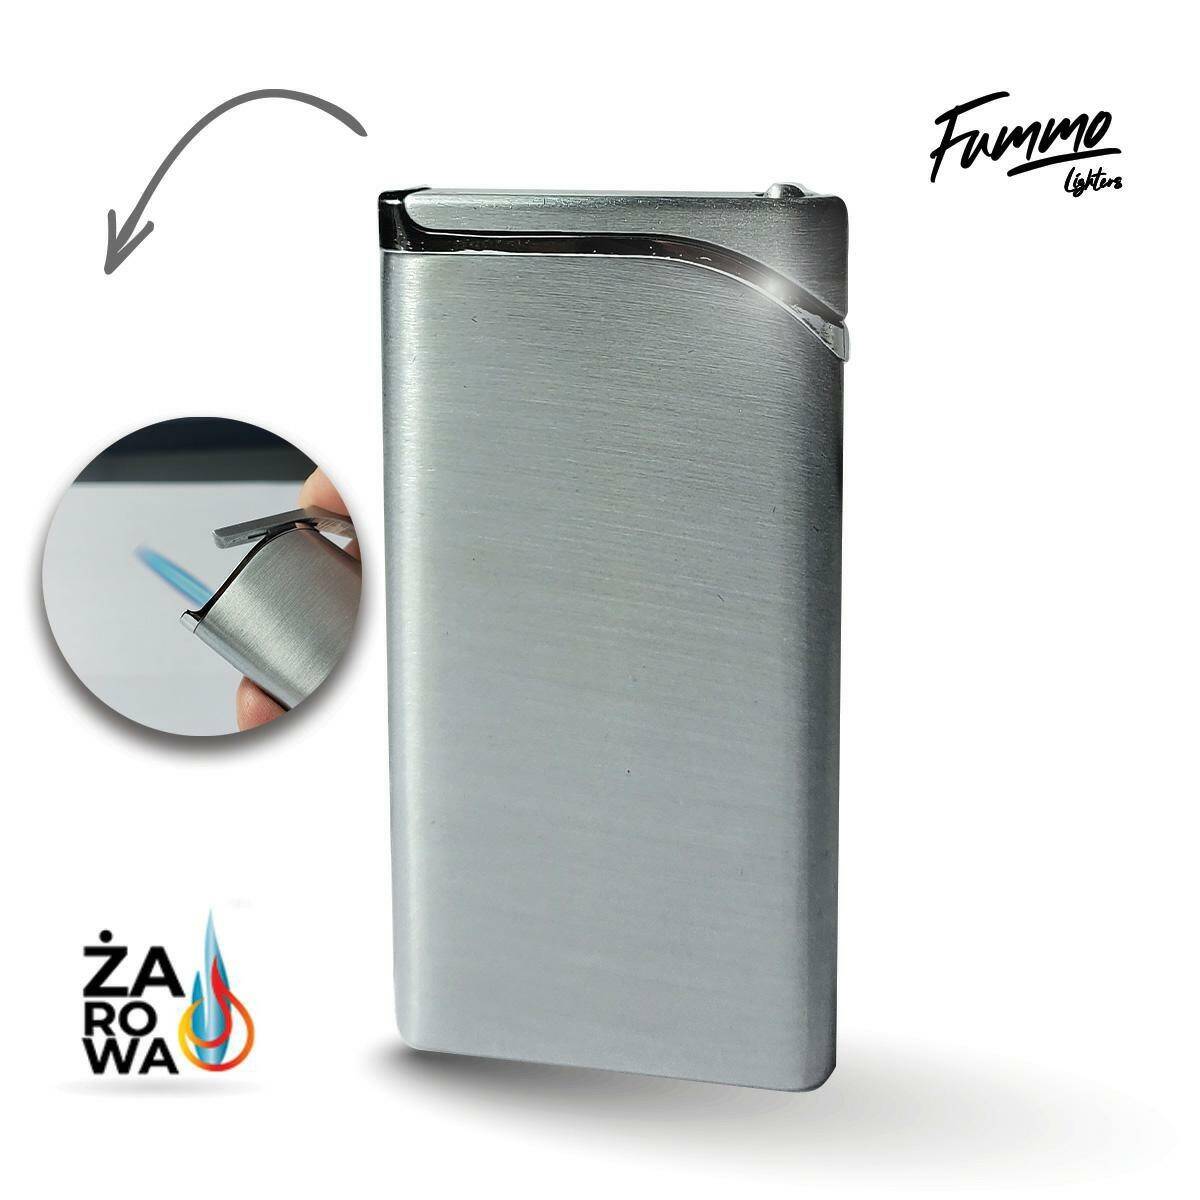 Lighter Fummo Toora - Silver (Zdjęcie 1)